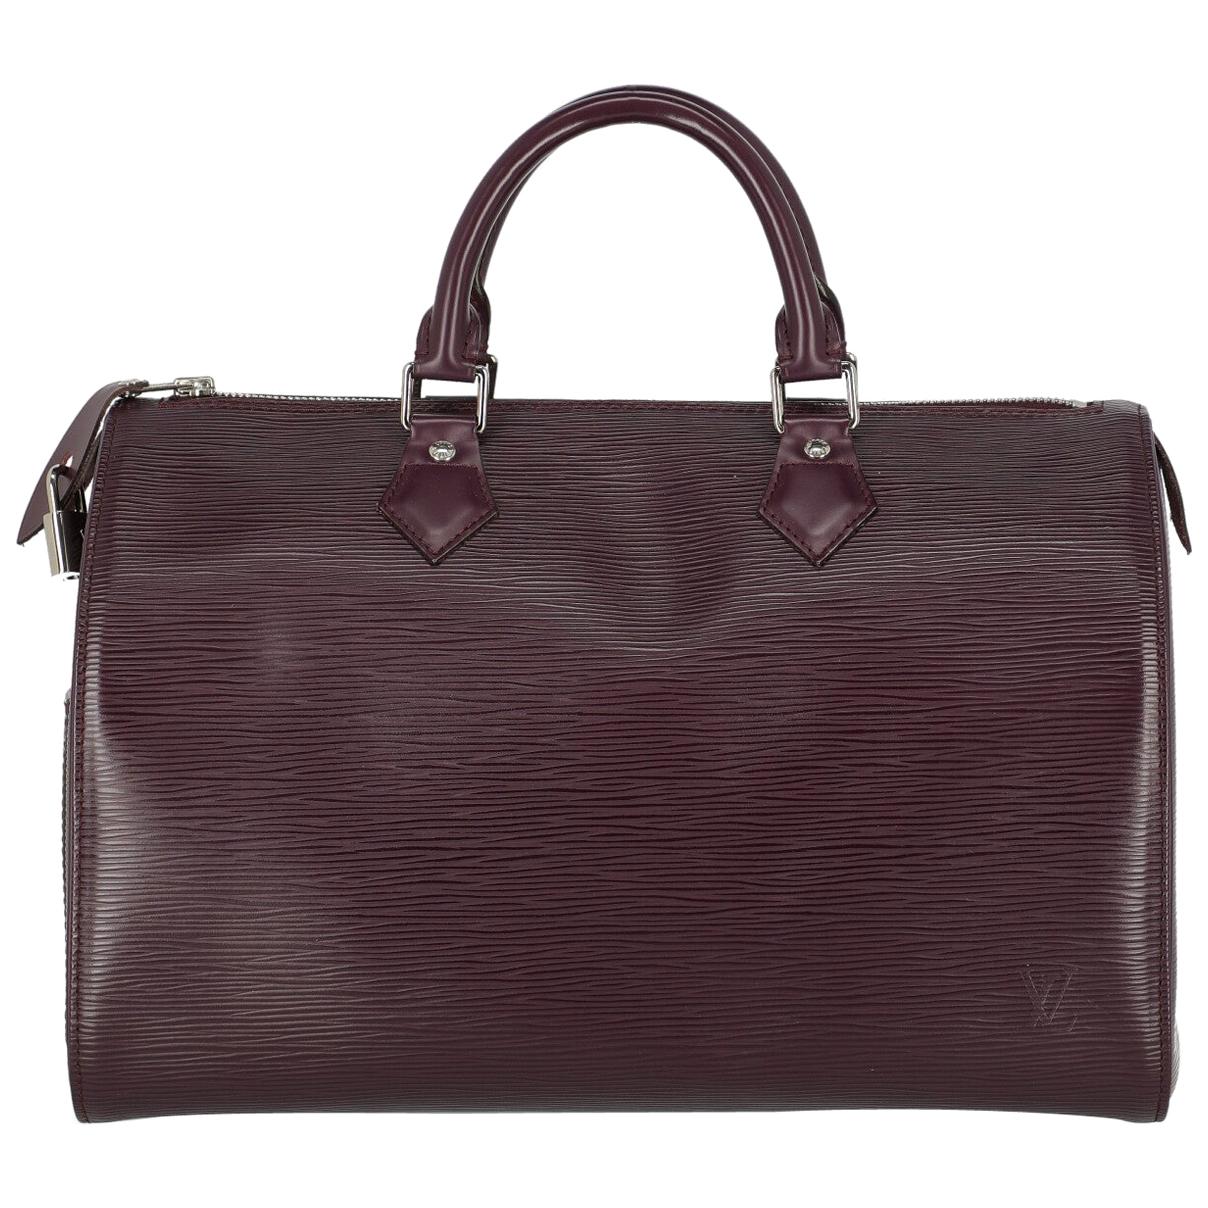 Louis Vuitton Woman Handbag Speedy 35 Purple Leather For Sale